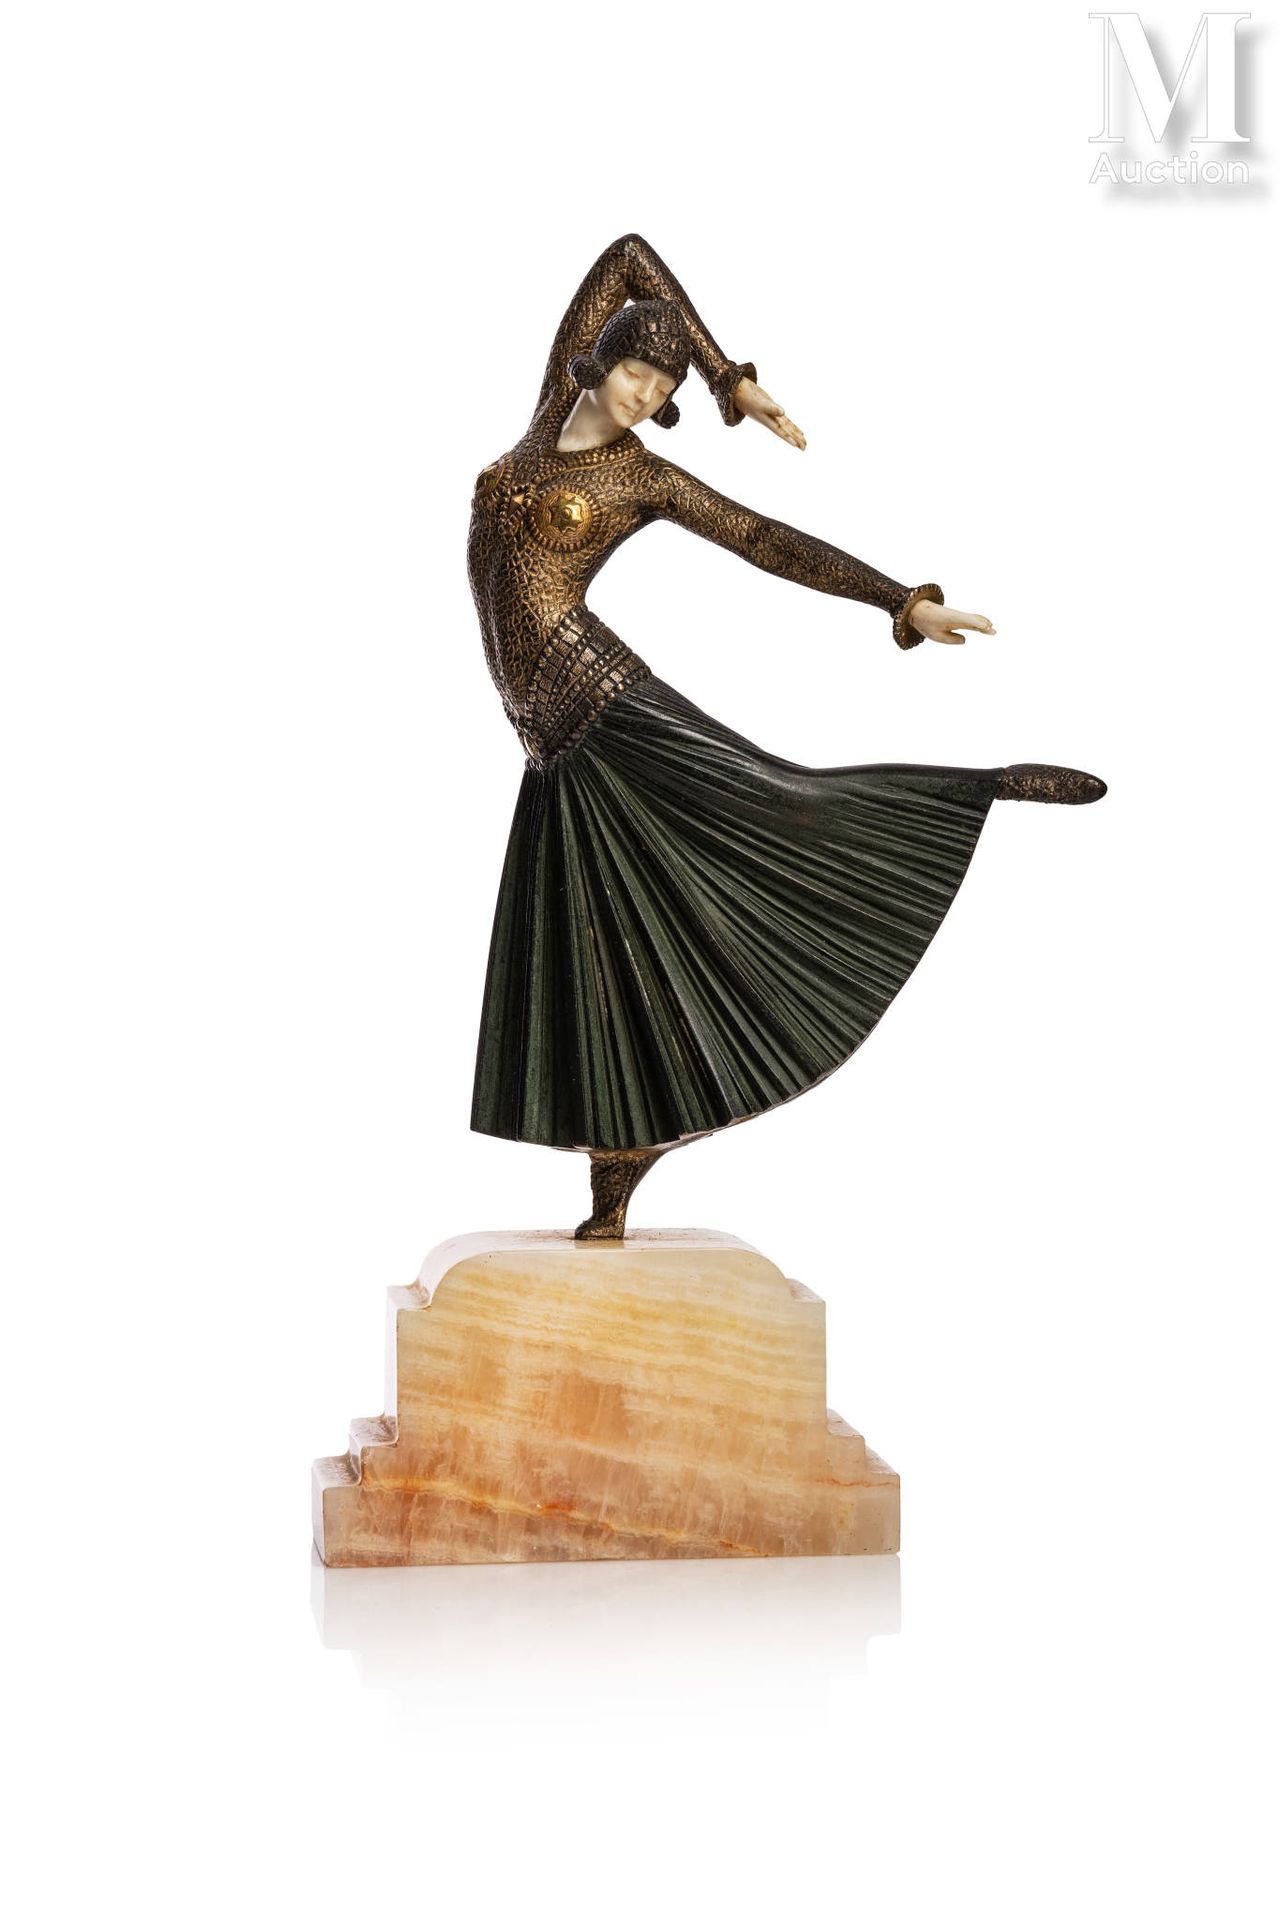 Demeter Haralamb CHIPARUS (1886-1947) "阿尤塔"



一件青铜镀绿和镀金的大象雕塑，雕刻着象牙的手和头。

缟玛瑙材质的&hellip;